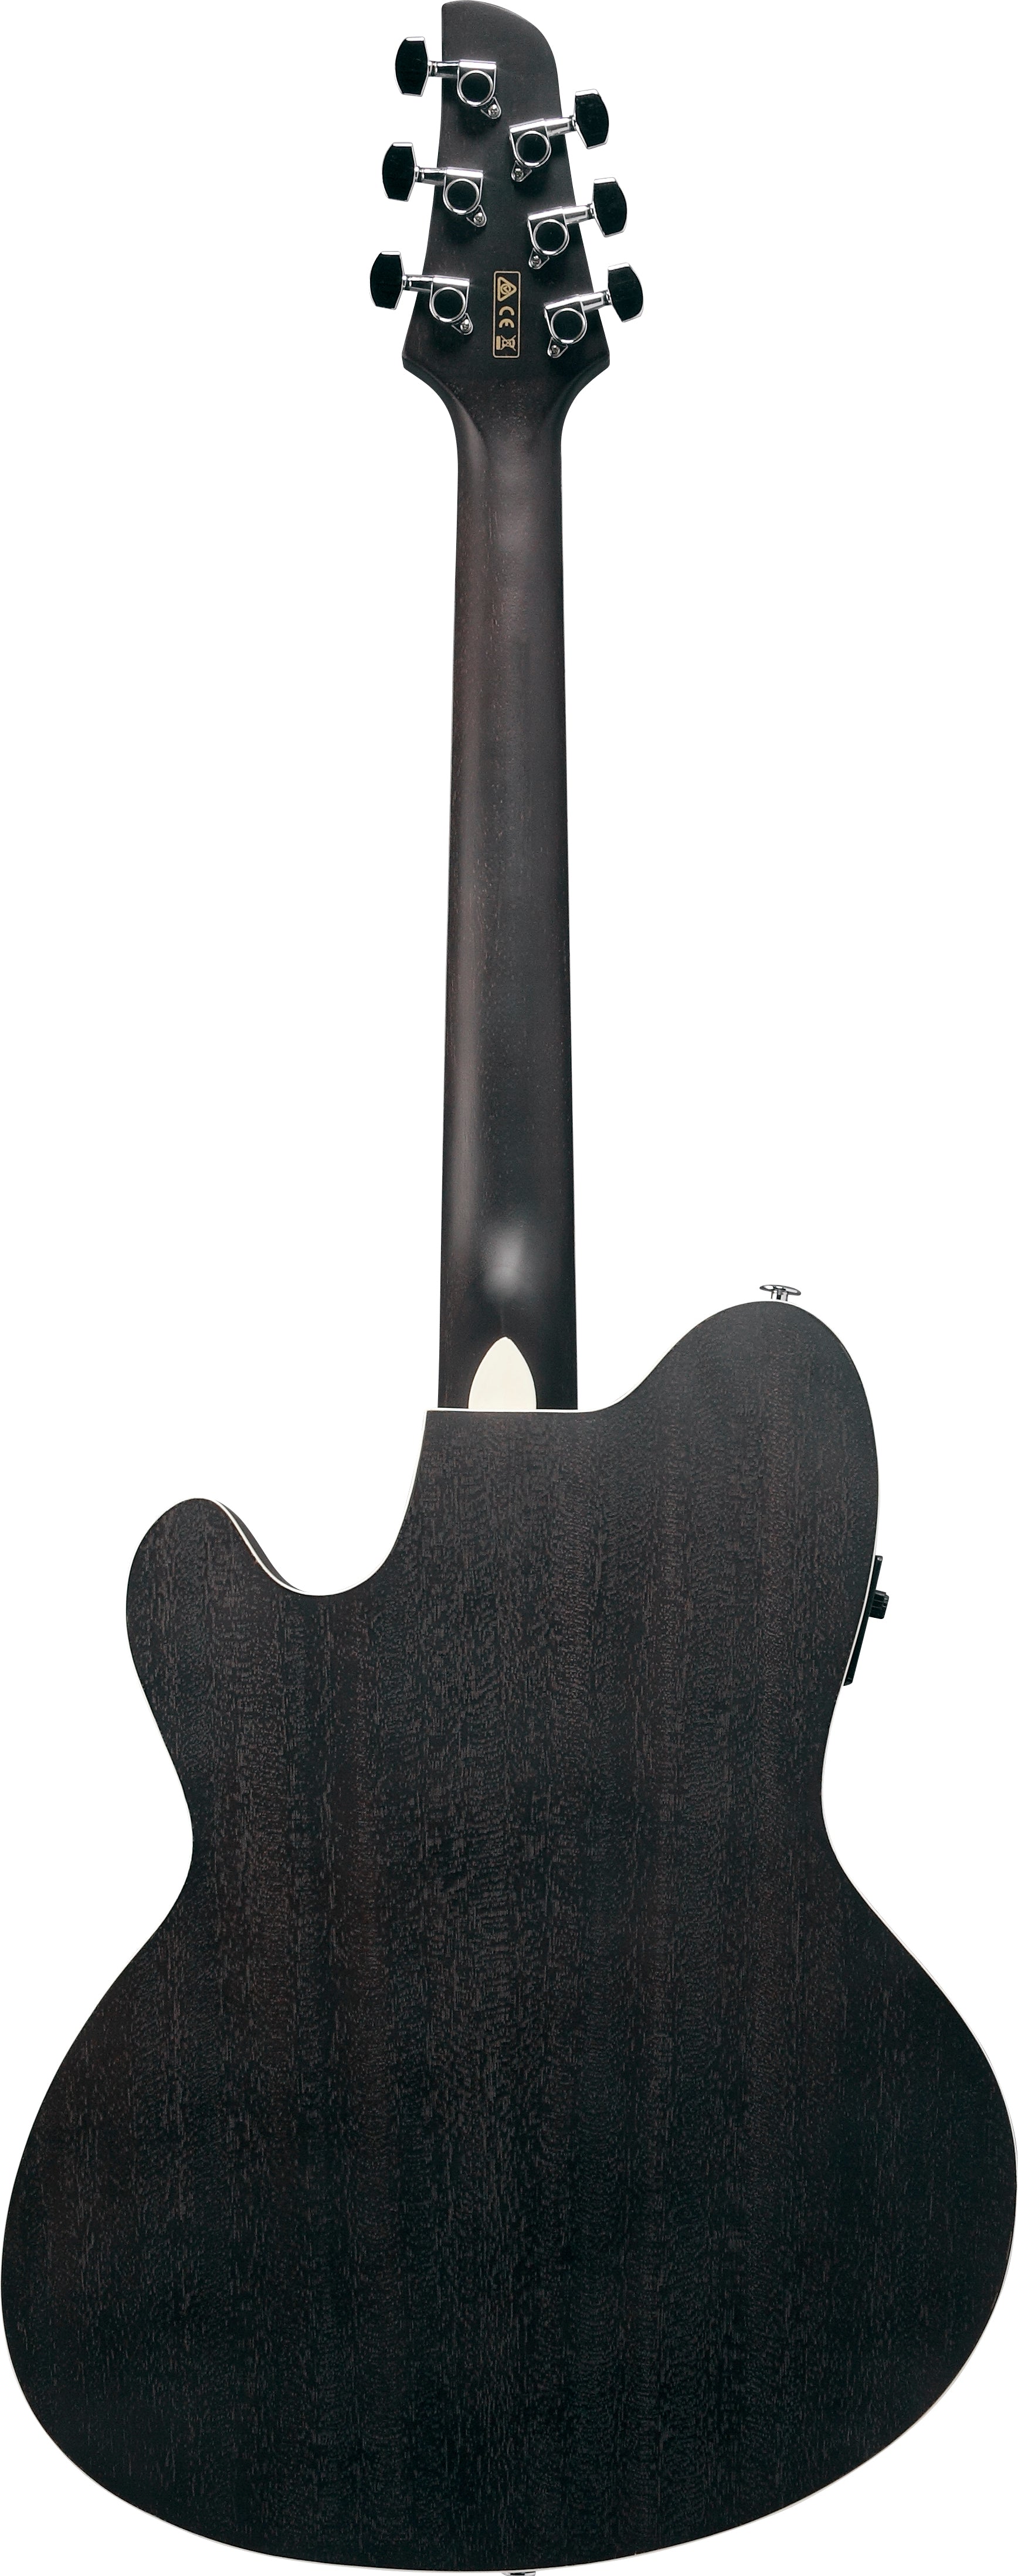 Ibanez TCM50 Acoustic Guitar (Galaxy Black Open Pore)